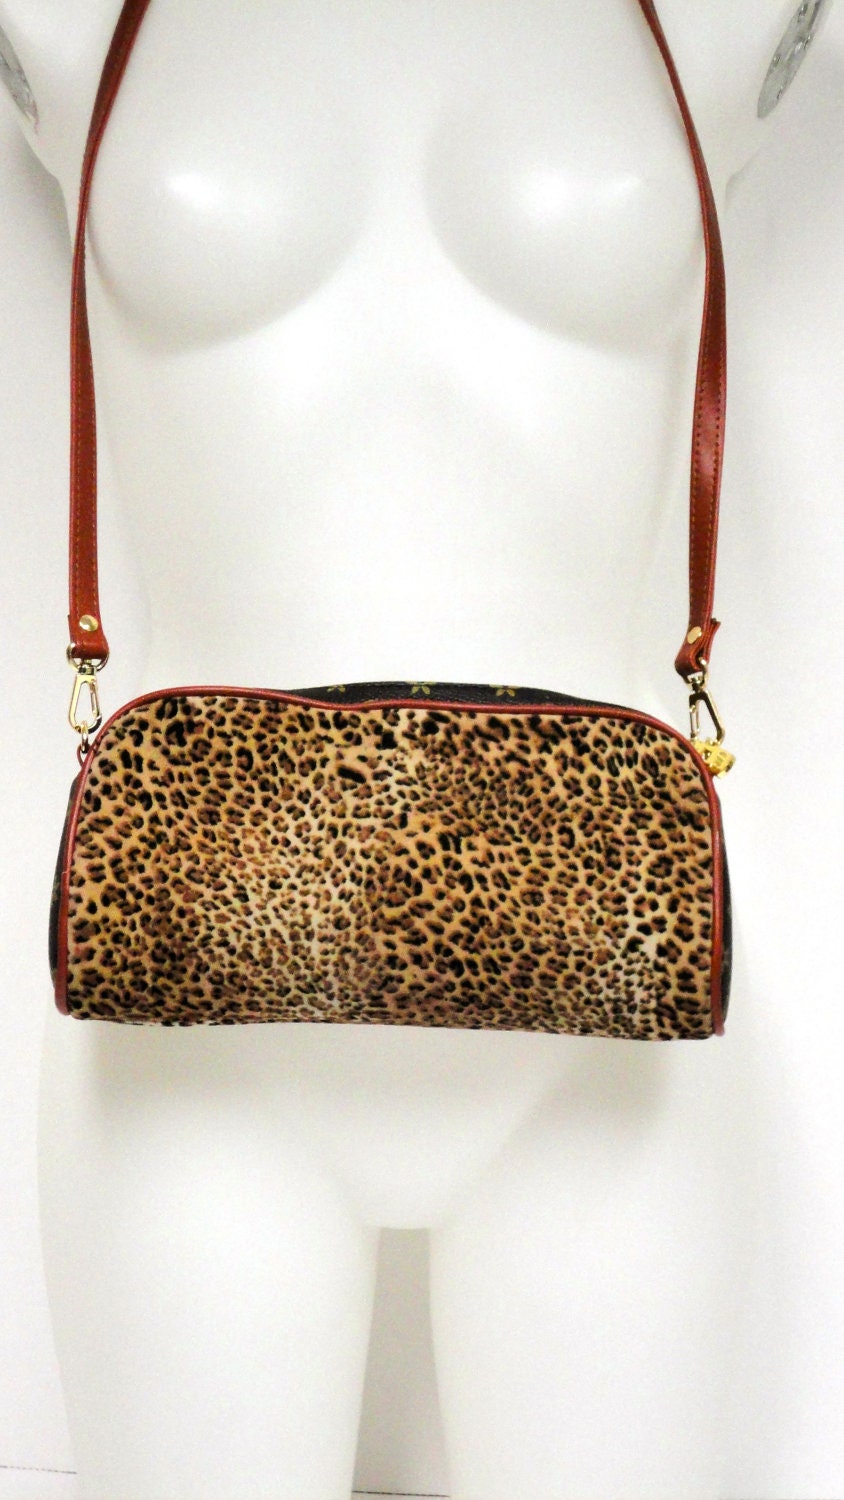 Louis Vuitton Inspired Handbag Leopard Print by InglenookMarket